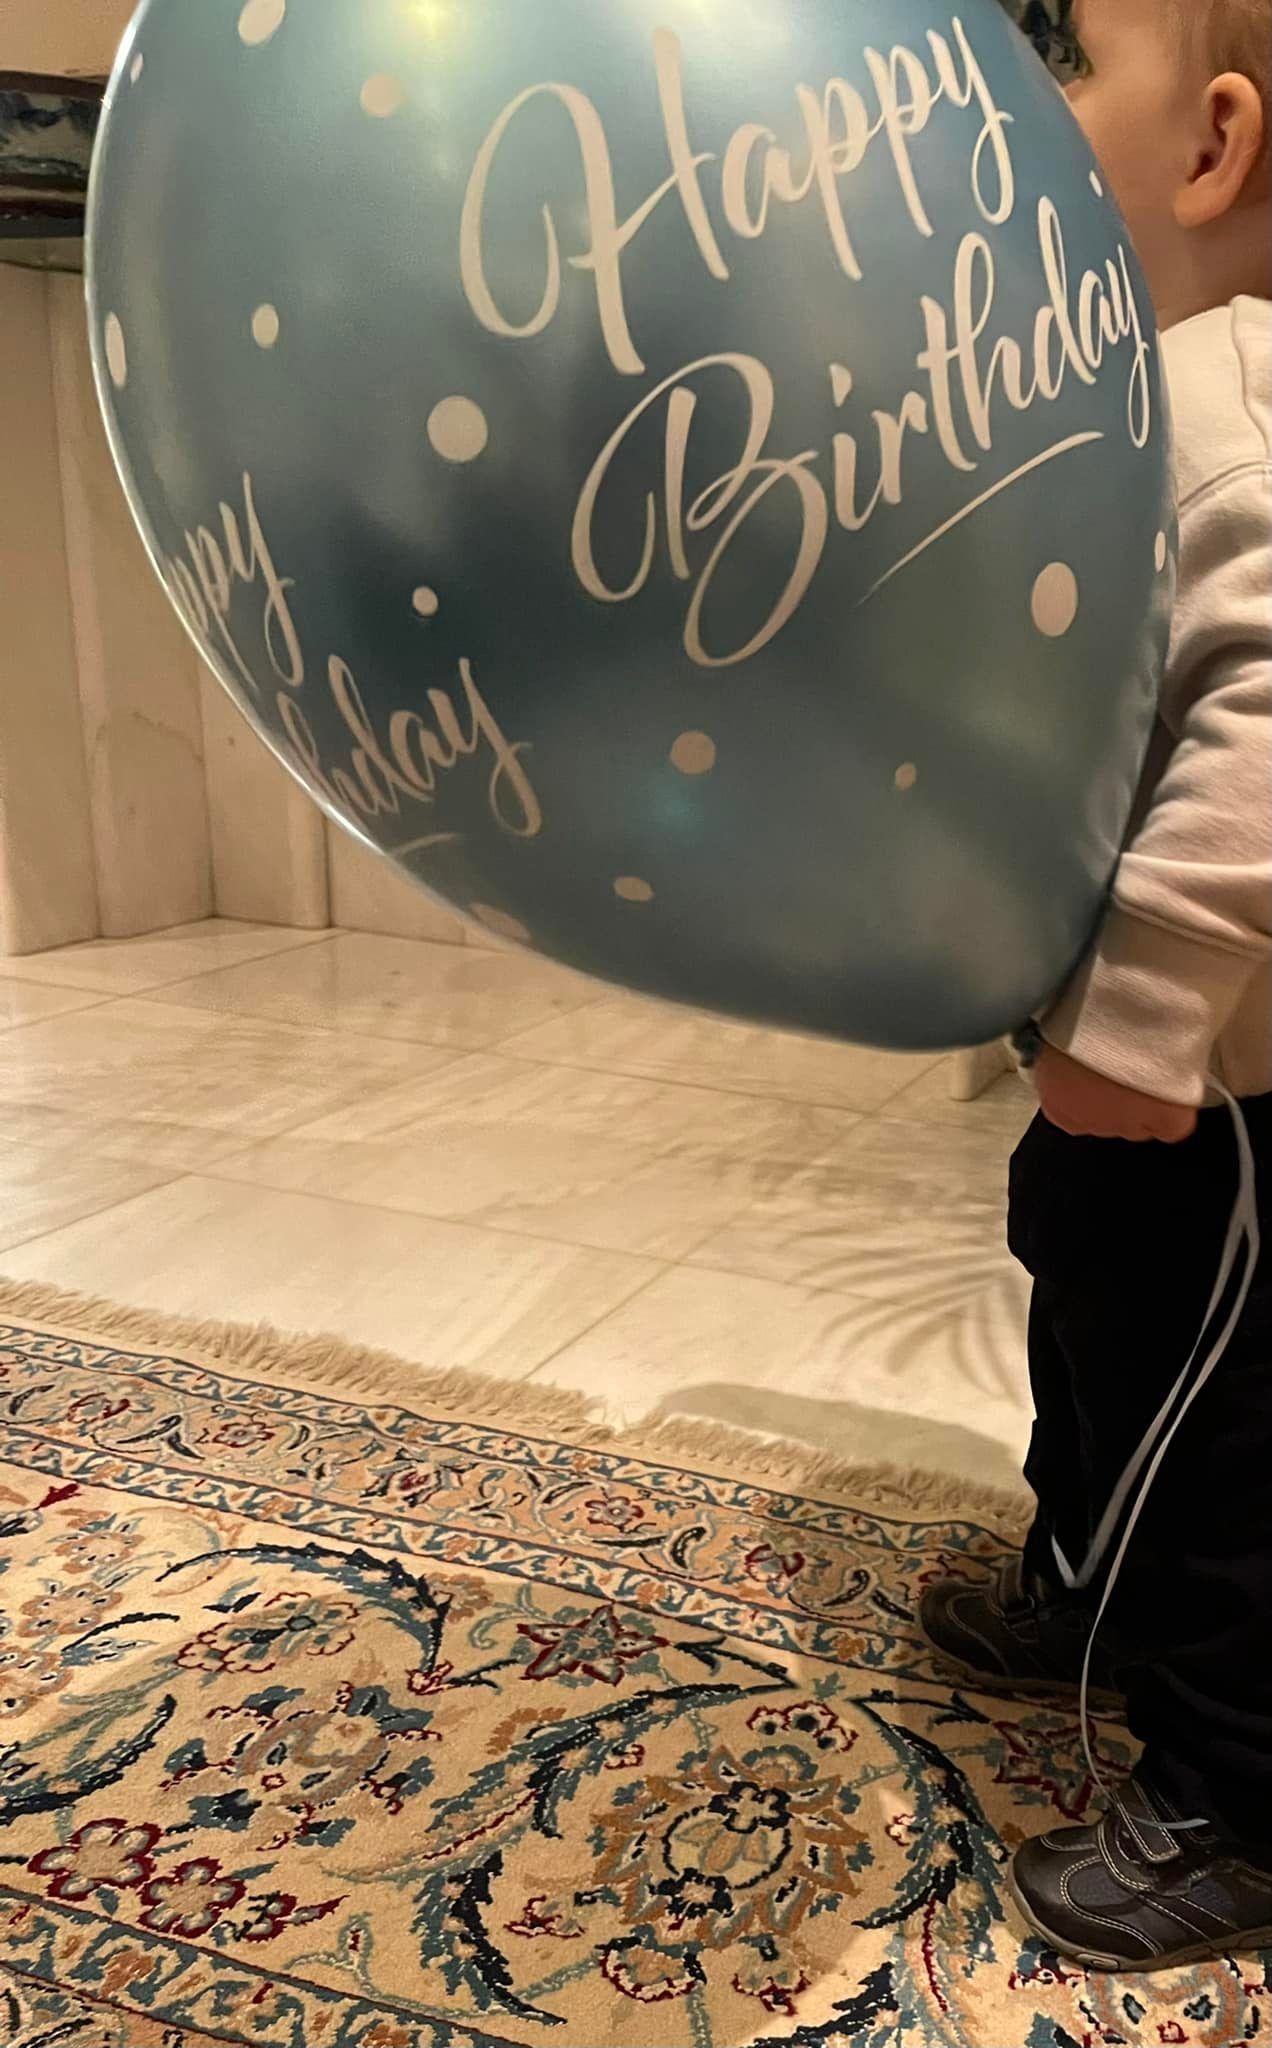 Aναστασία Παπαδοπούλου: “Λιώσαμε” με τον ενός έτους γιο της να κρατάει  μπαλόνι για τα γενέθλια της! | Ι LOVE STYLE